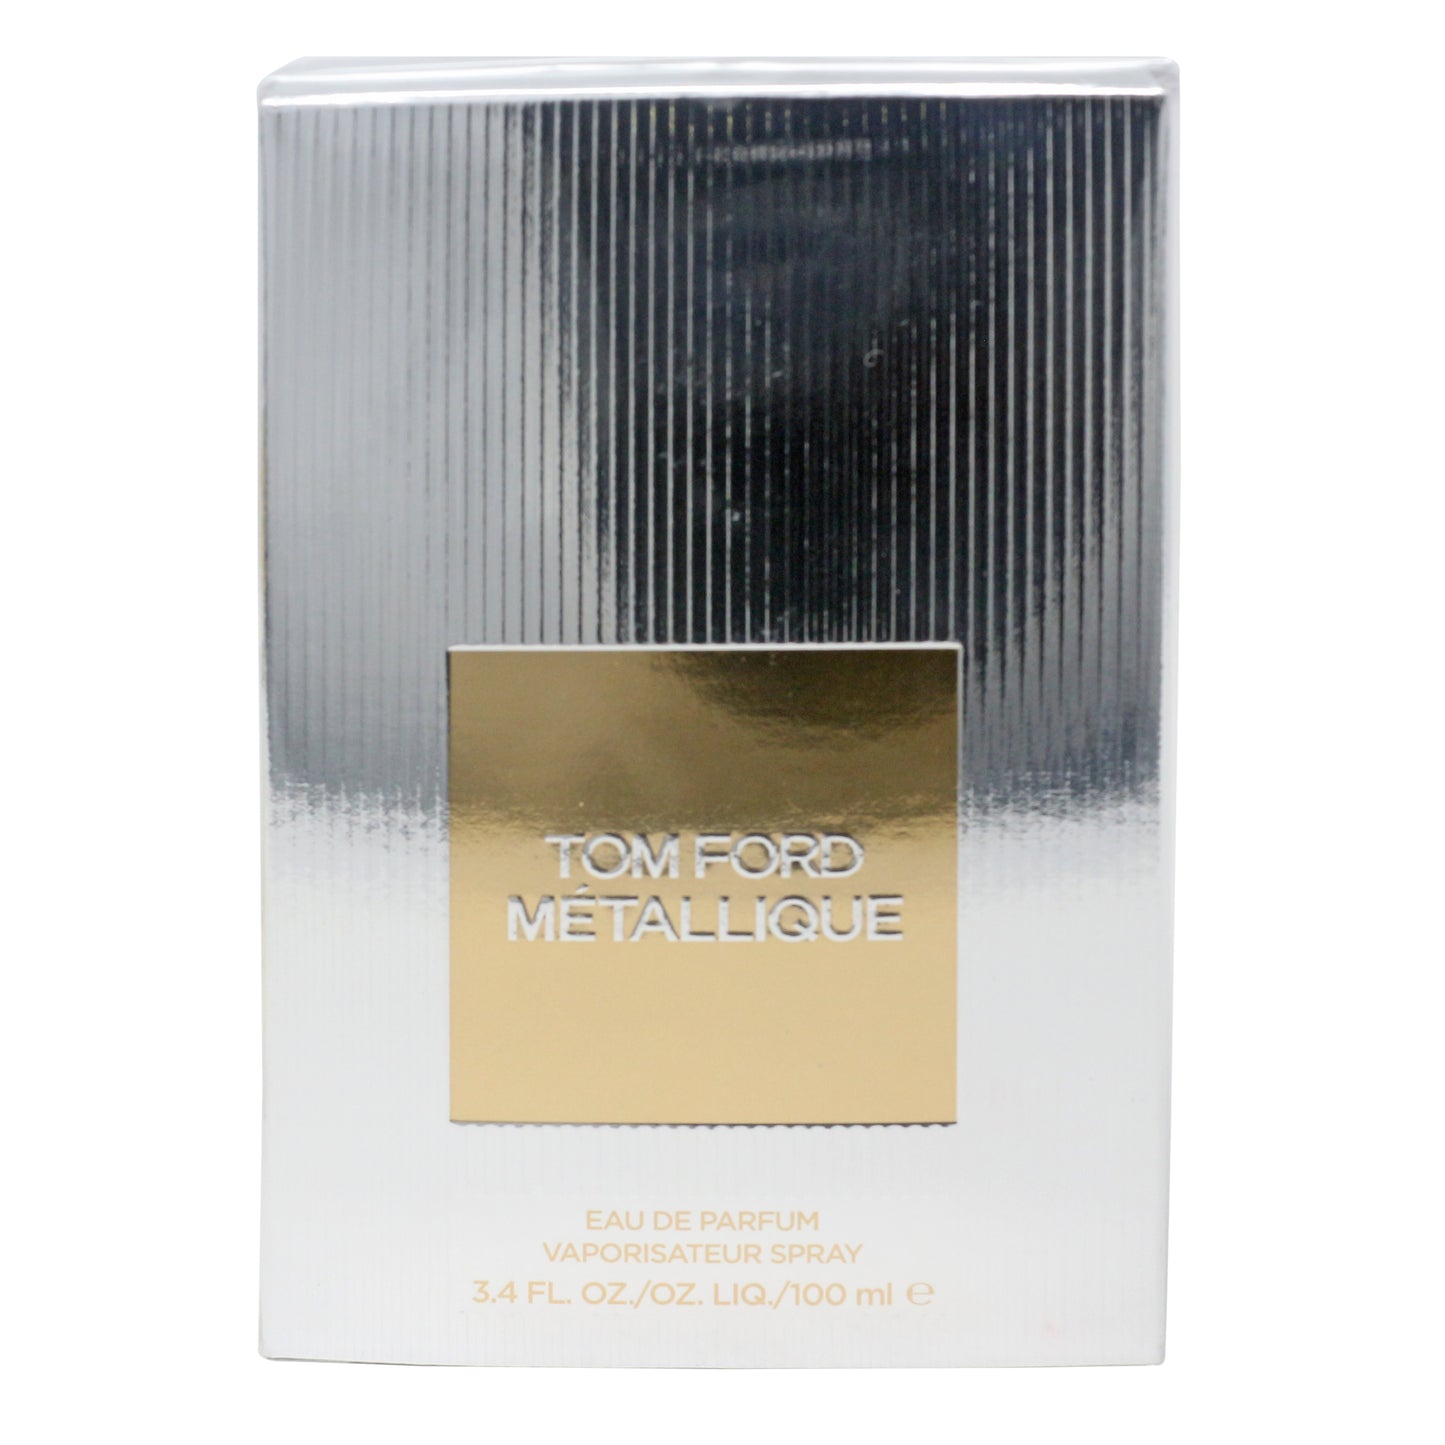 Metallique by Tom Ford Eau De Parfum 3.4oz/100ml Spray New In Box